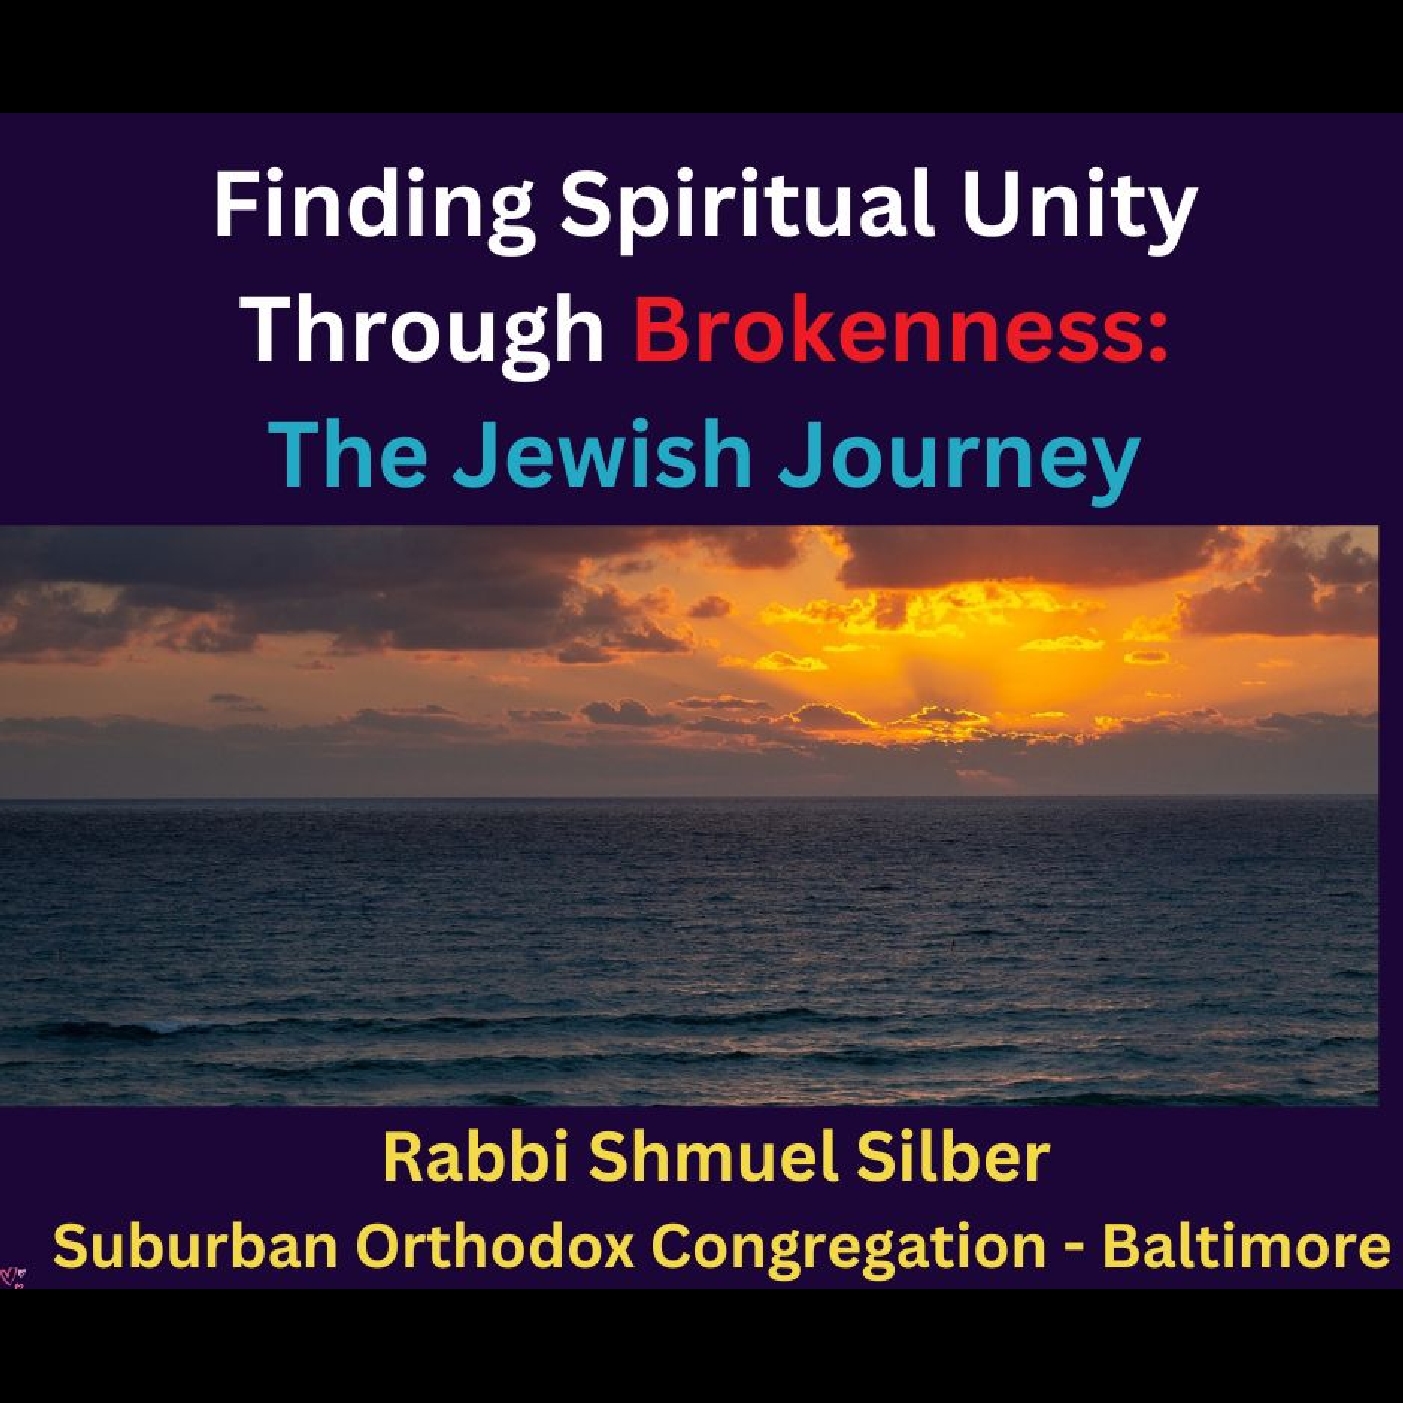 Finding Spiritual Unity Through Brokenness: The Jewish Journey - Rabbi Shmuel Silber